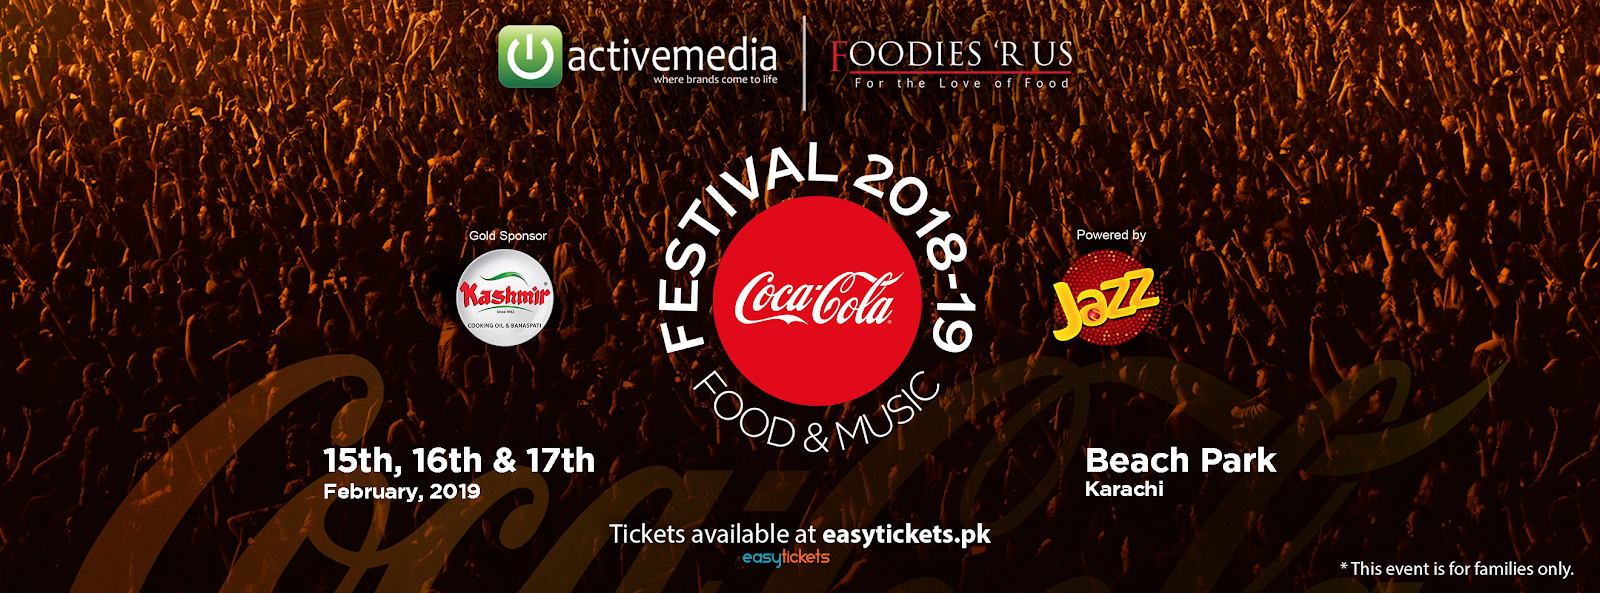 coke-food-and-music-festival-2018-2019